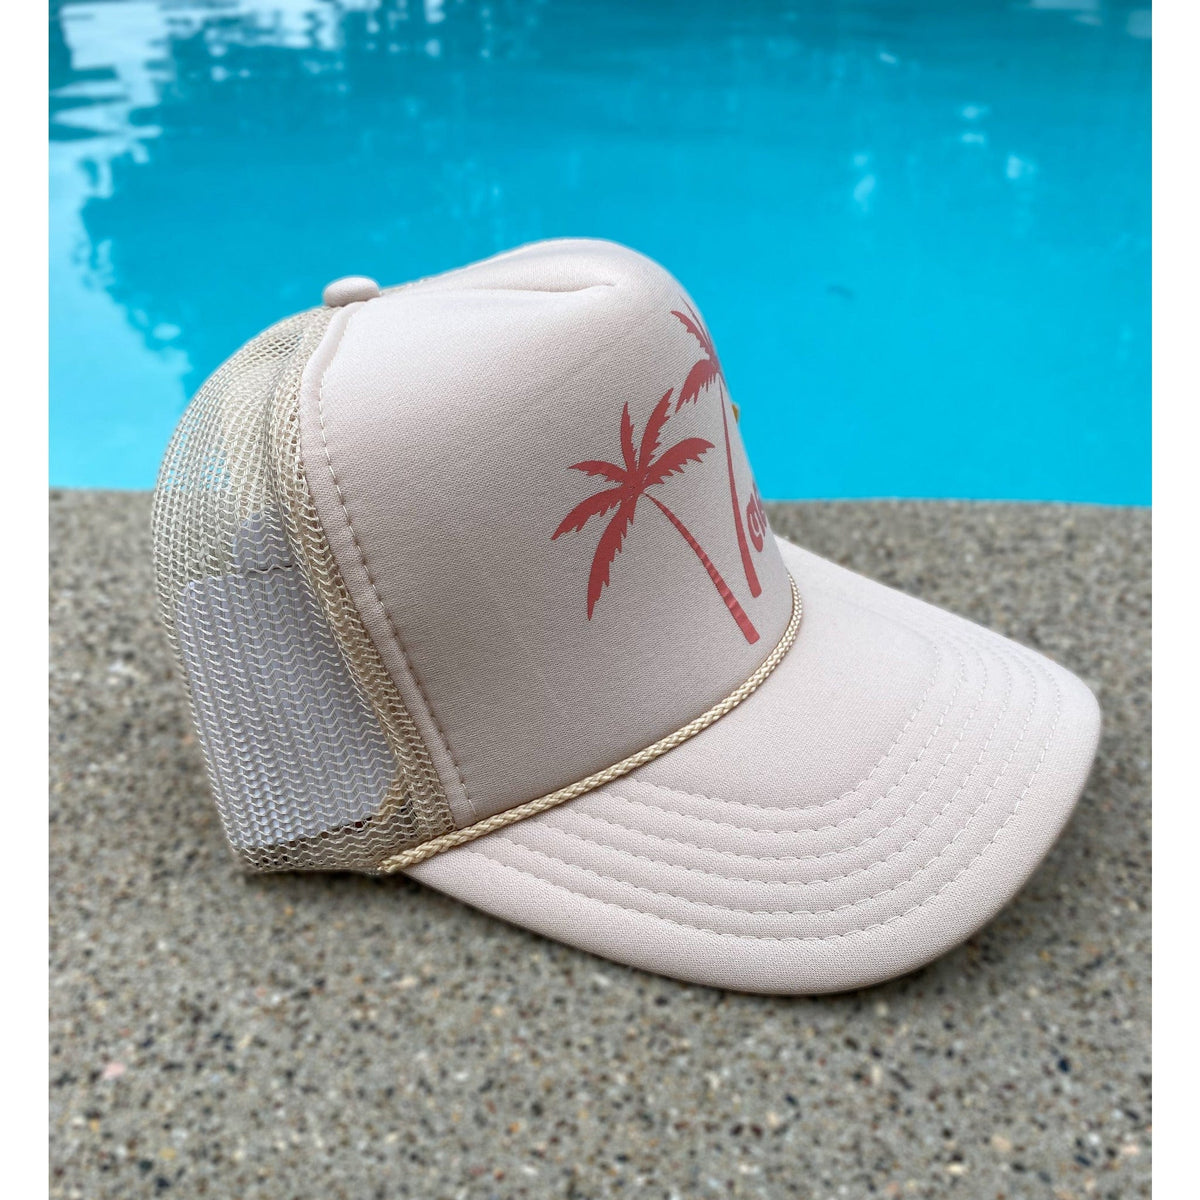 Mañana Palm Tree- Haute Sheet Trucker Hat Hats TheFringeCultureCollective